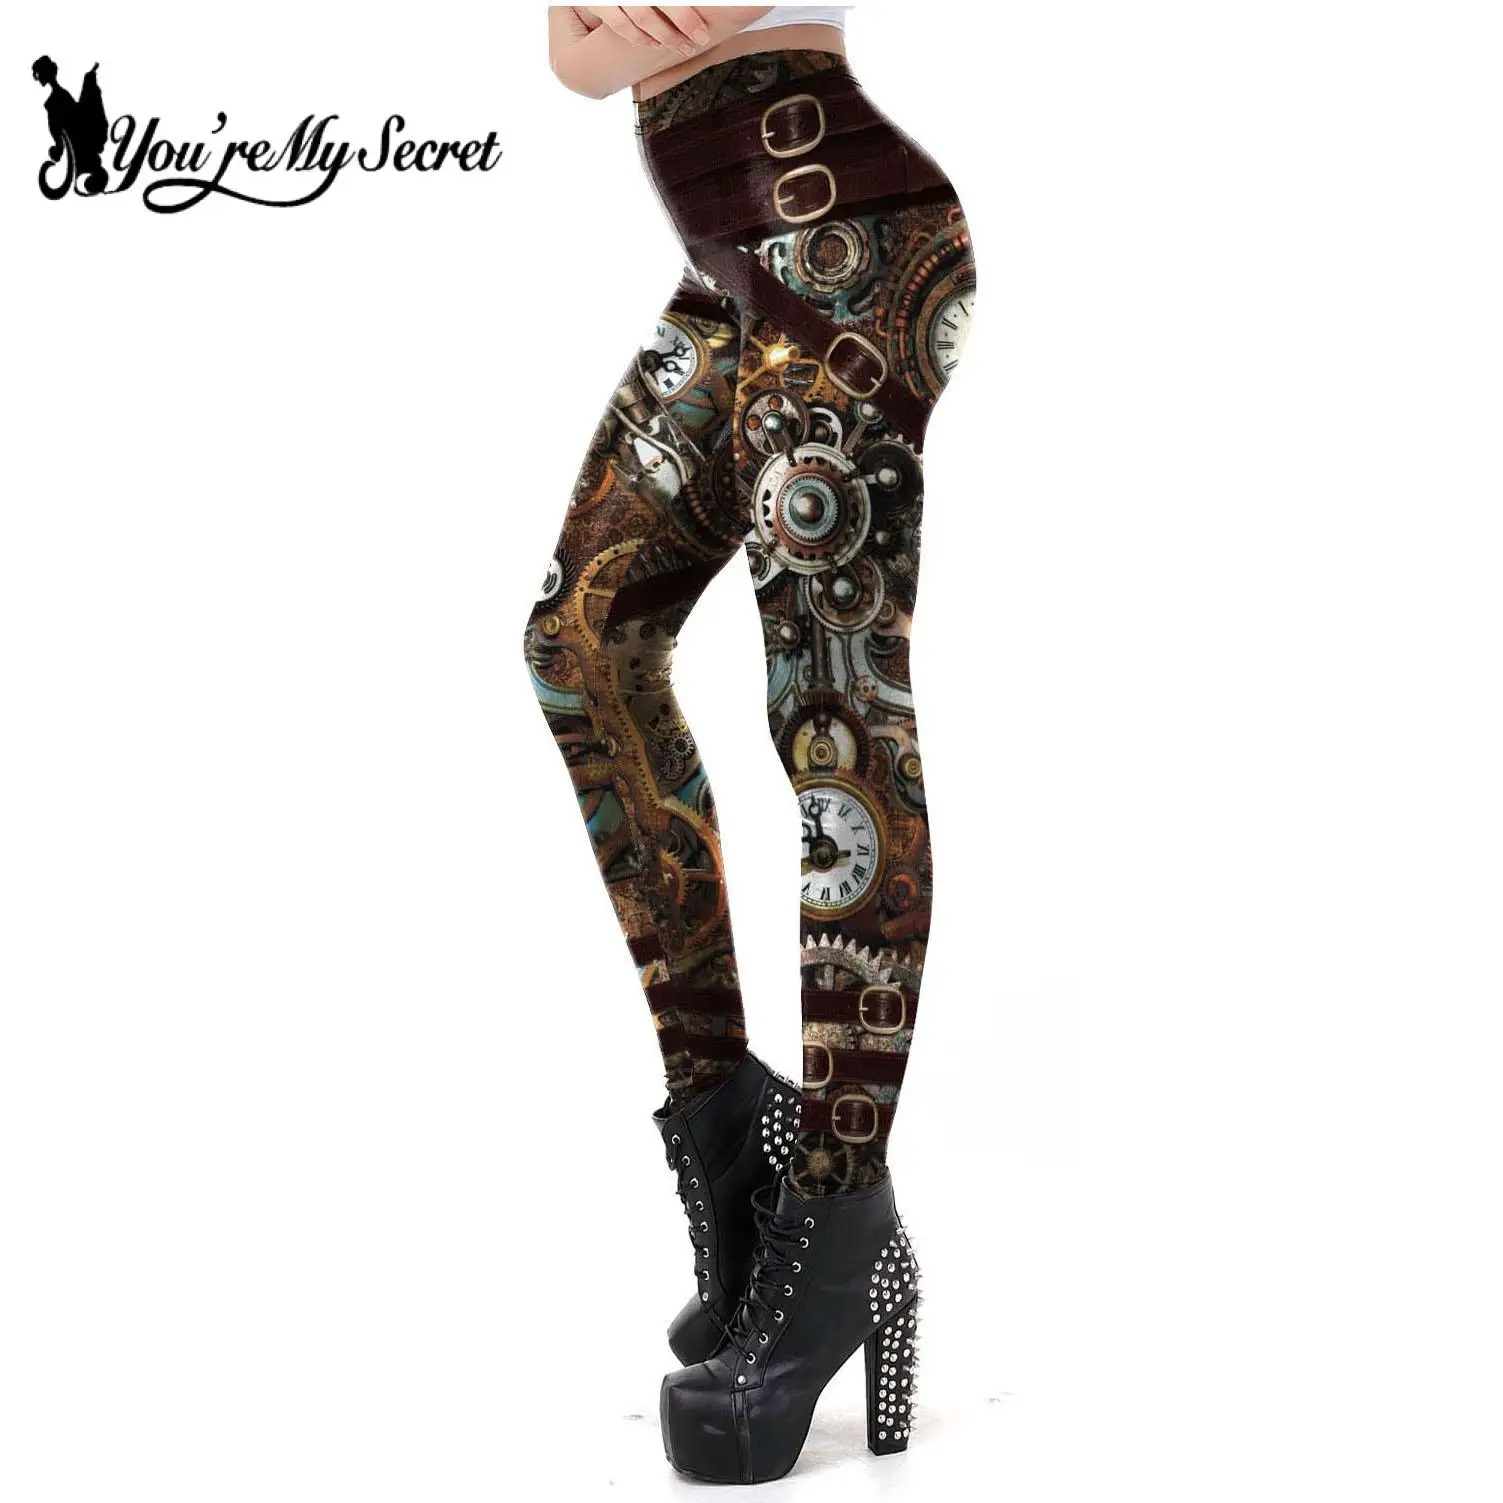 

[You're My Secret] Vintage Mechanical Gear Women Leggings Workout Pants 3D Printed Steampunk Slim Leggins Fitness Sexy Legins